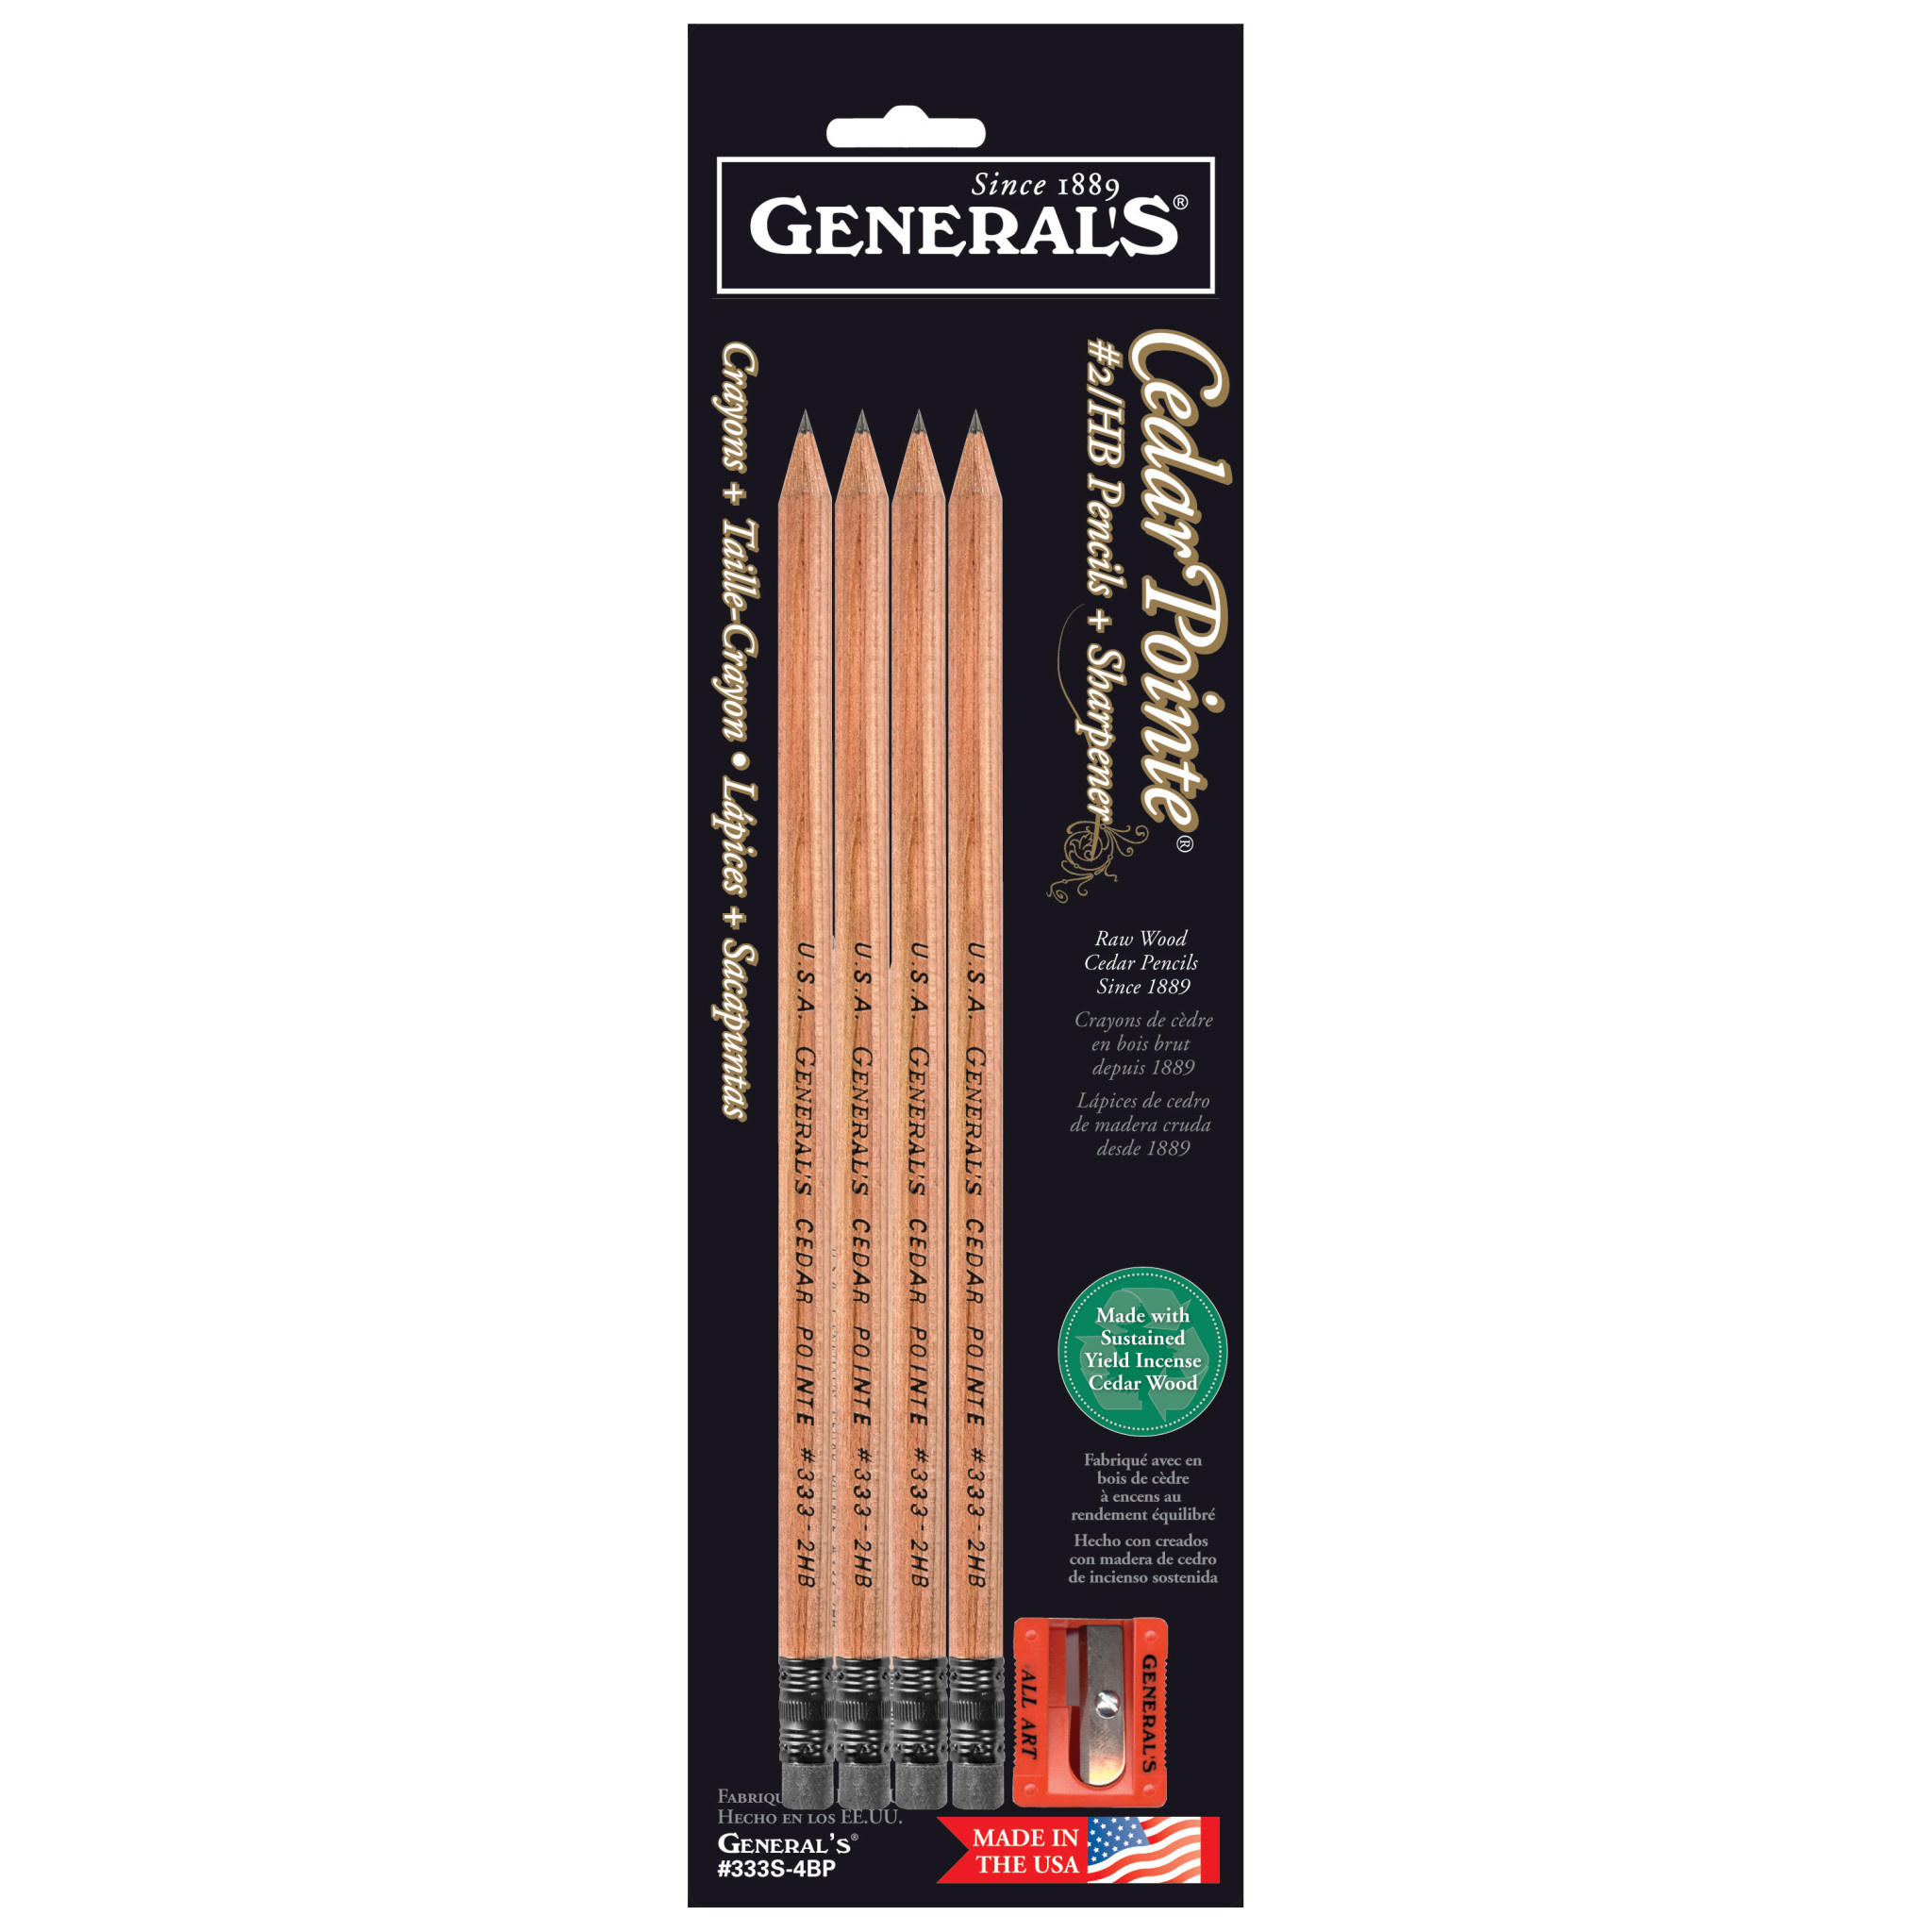 General's Cedar Pointe 2/HB (No. 2) Graphite Pencil — Two Hands